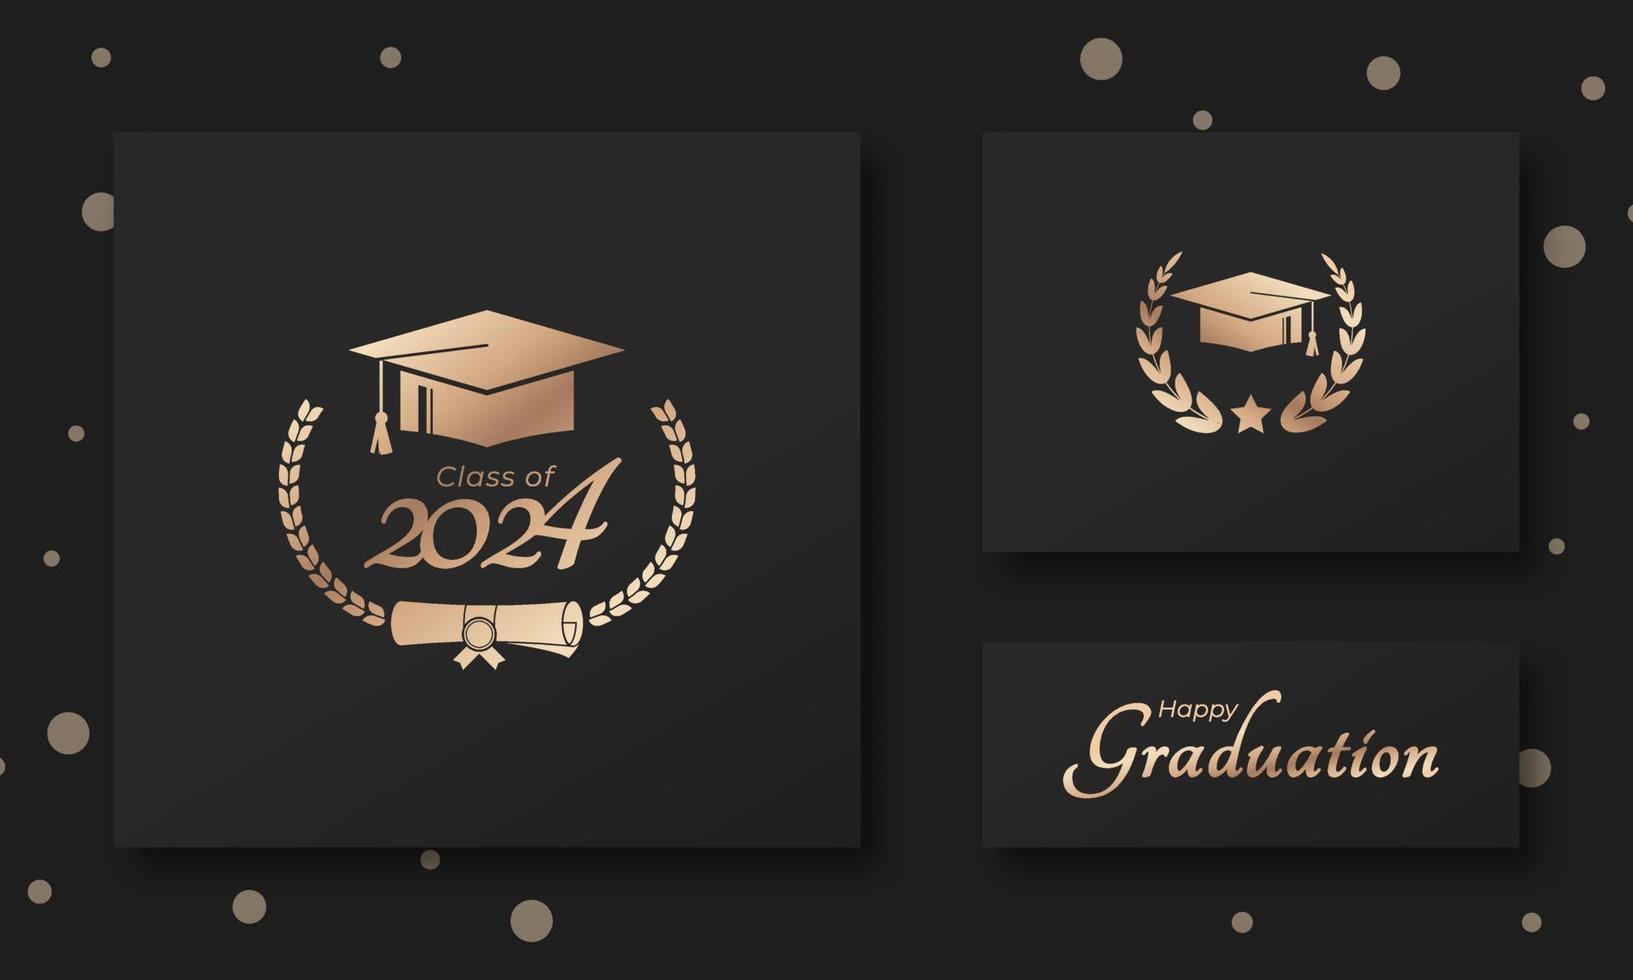 Class of 2024 Year Graduation of Decorate Congratulation with Laurel Wreath for School Graduates vector